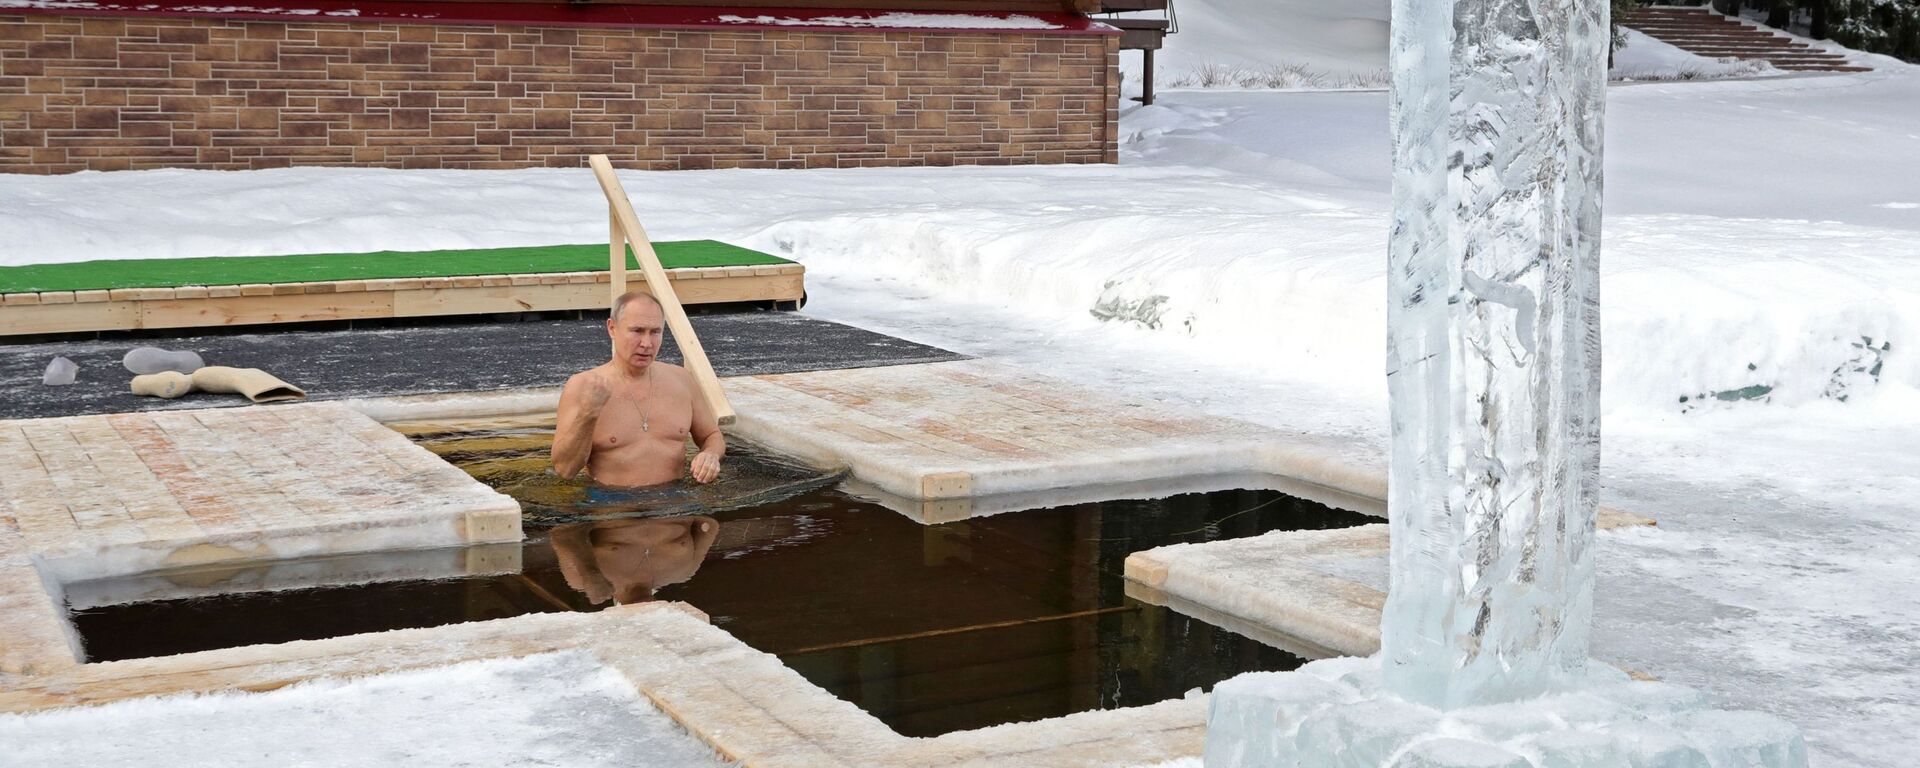 Predsednik Rusije Vladimir Putin zaranja u ledenu vodu na Bogojavljenje - Sputnik Srbija, 1920, 21.01.2021